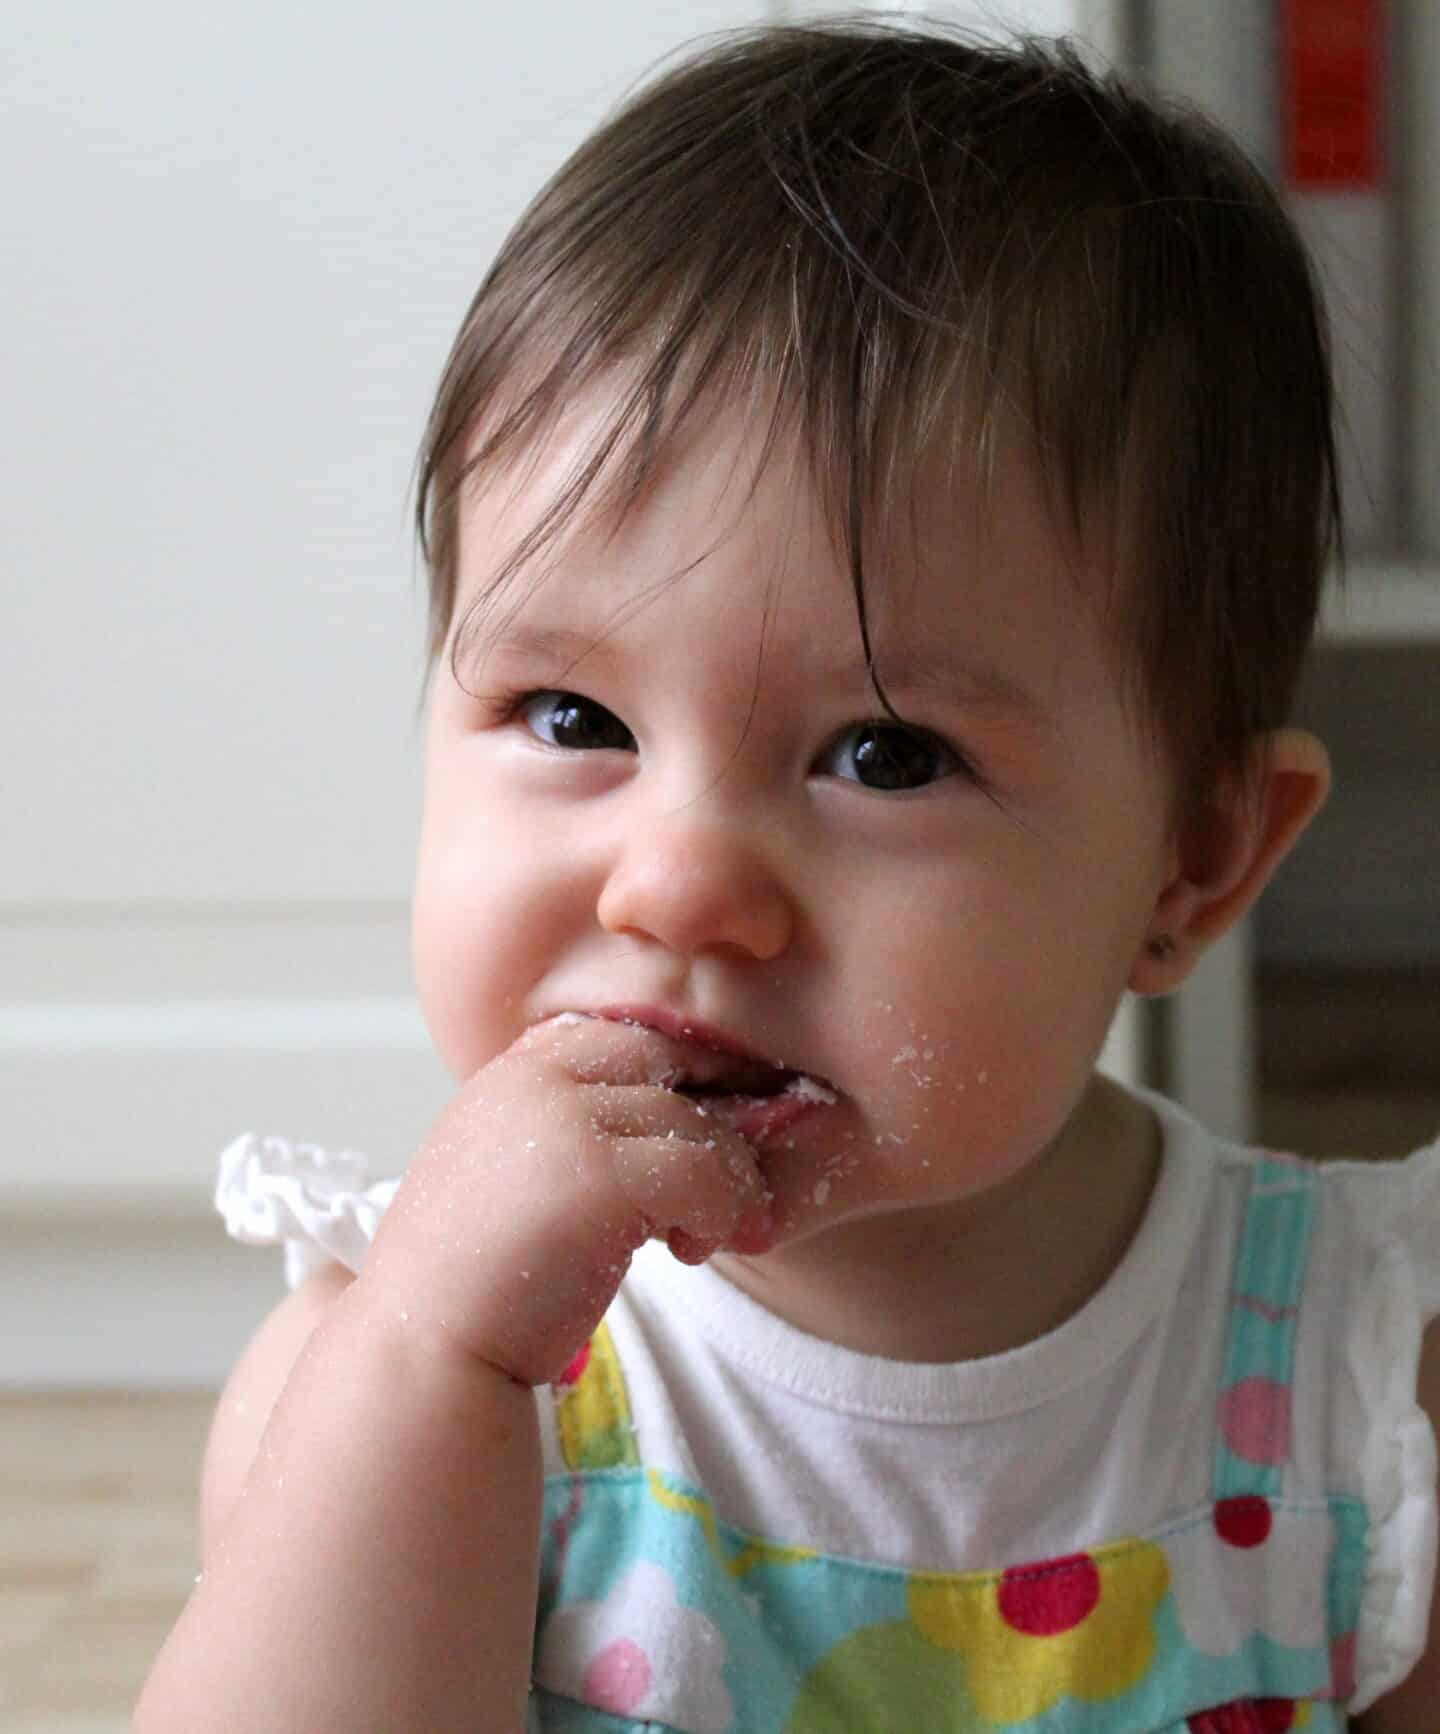 baby sensory play with dry mashed potato flakes